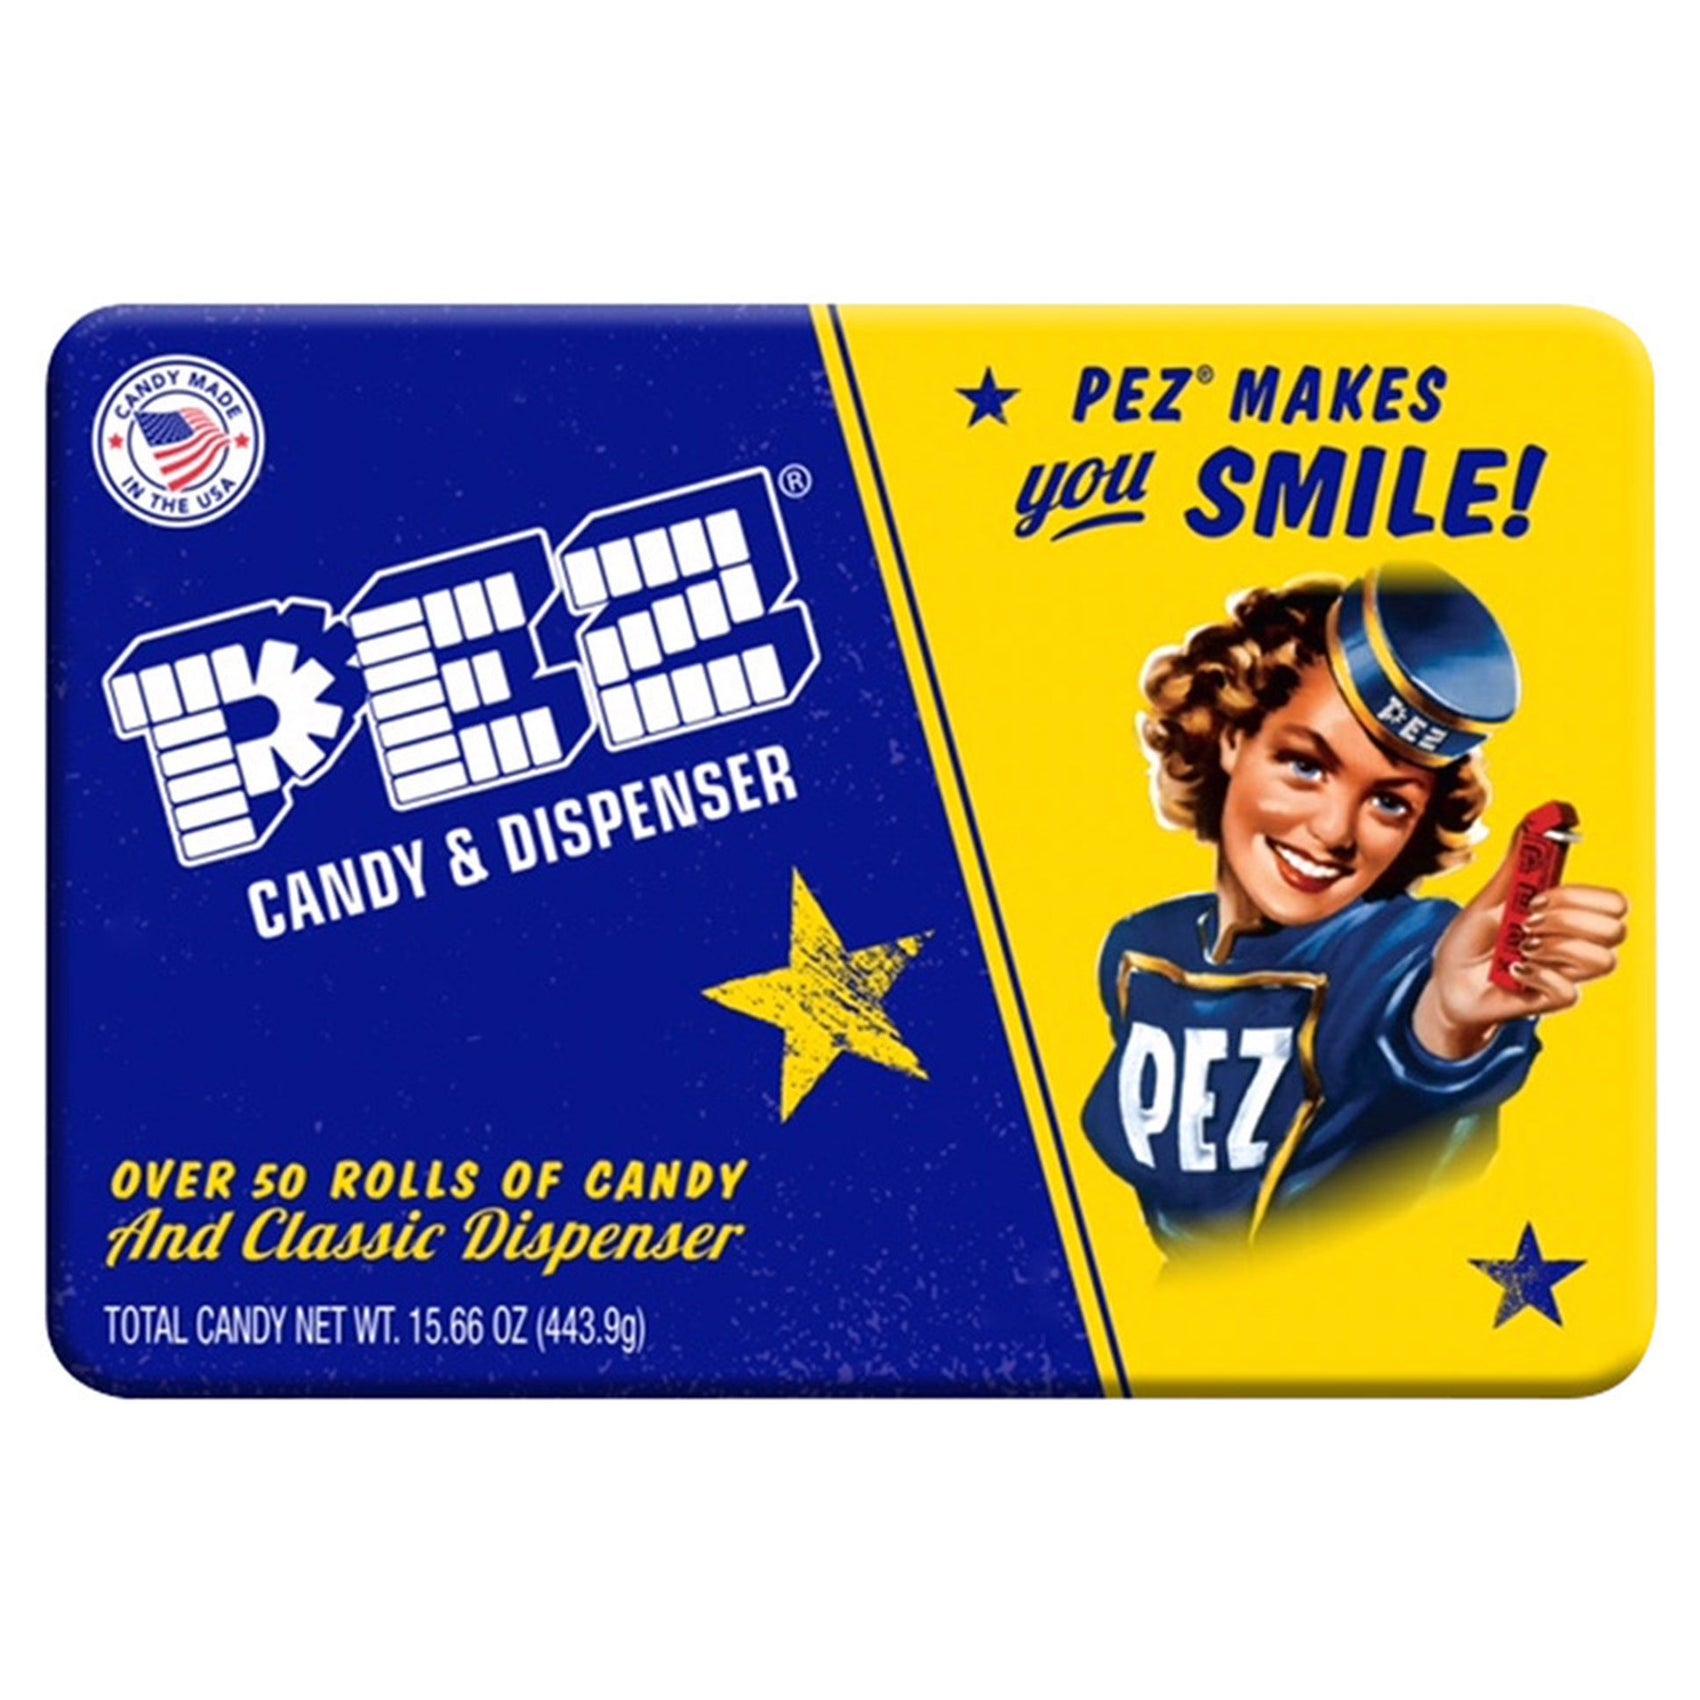 Pez candy - dispensing pop culture - Candy Funhouse